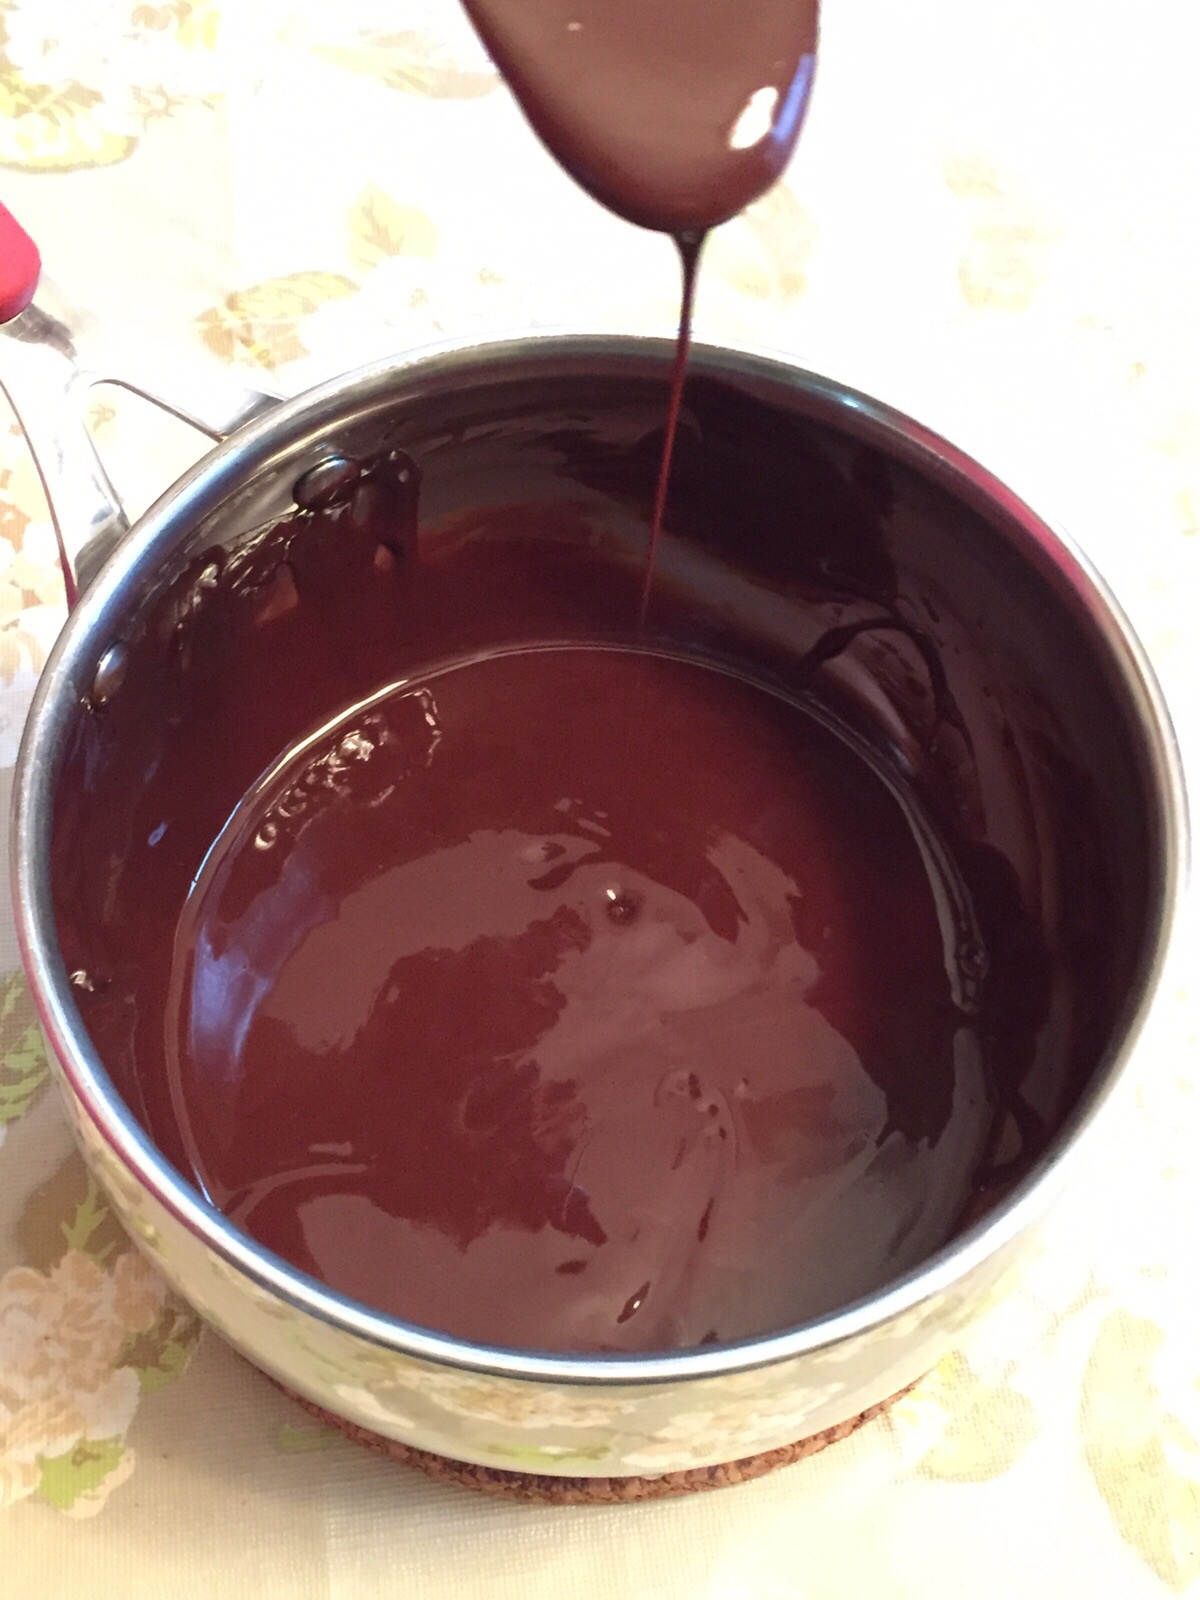 Butter-chocolate sauce